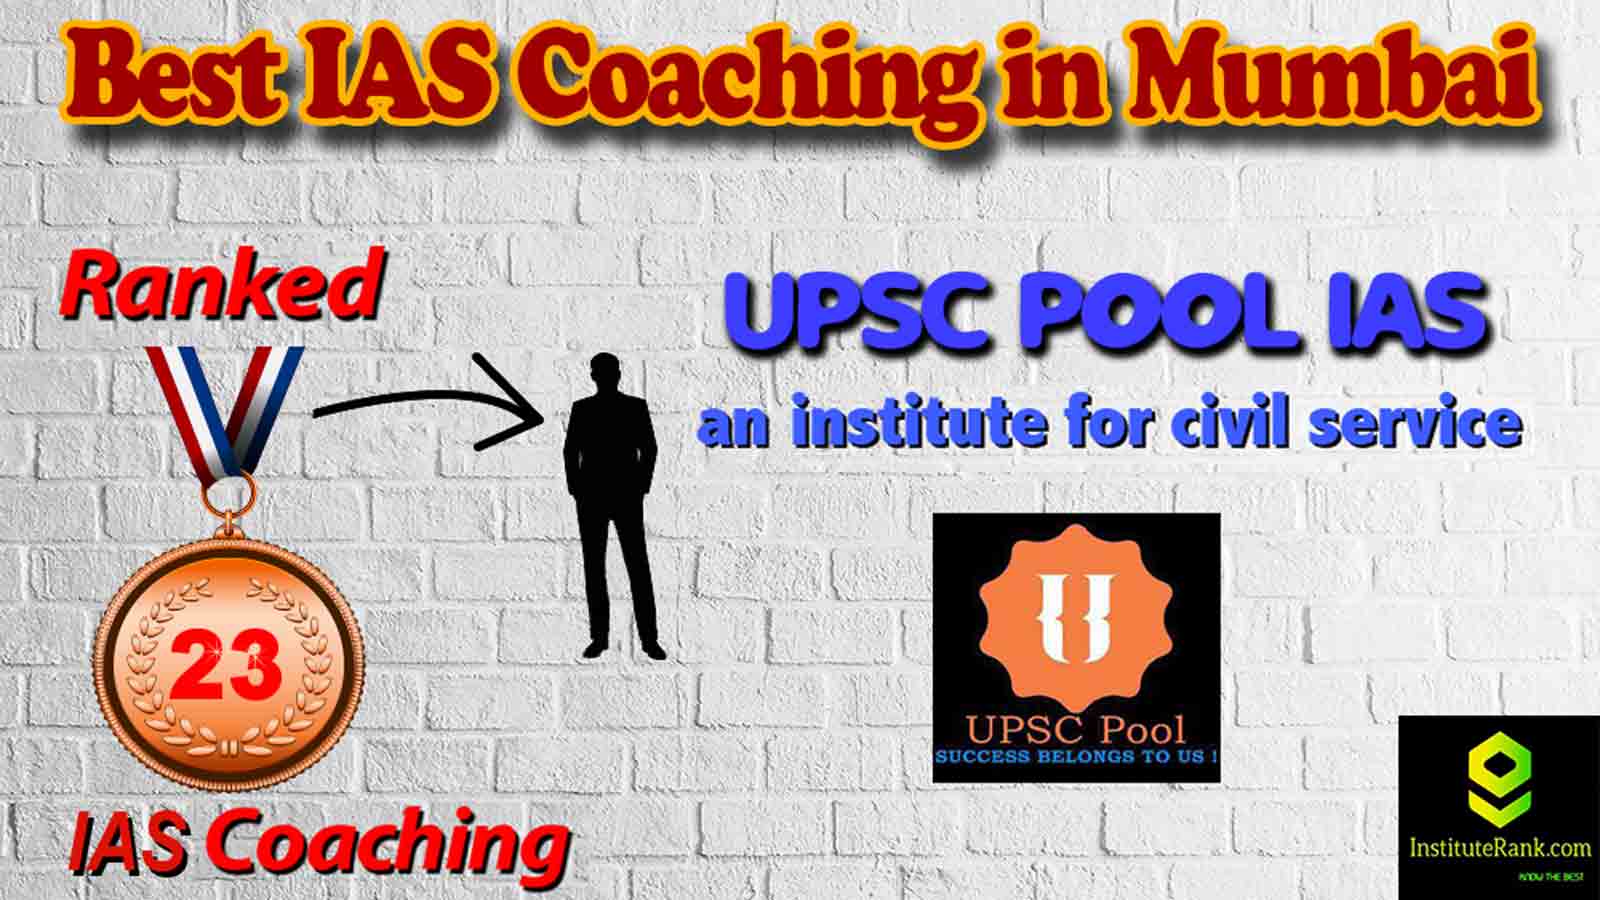 Rank 23 Best IAS Coaching in Mumbai